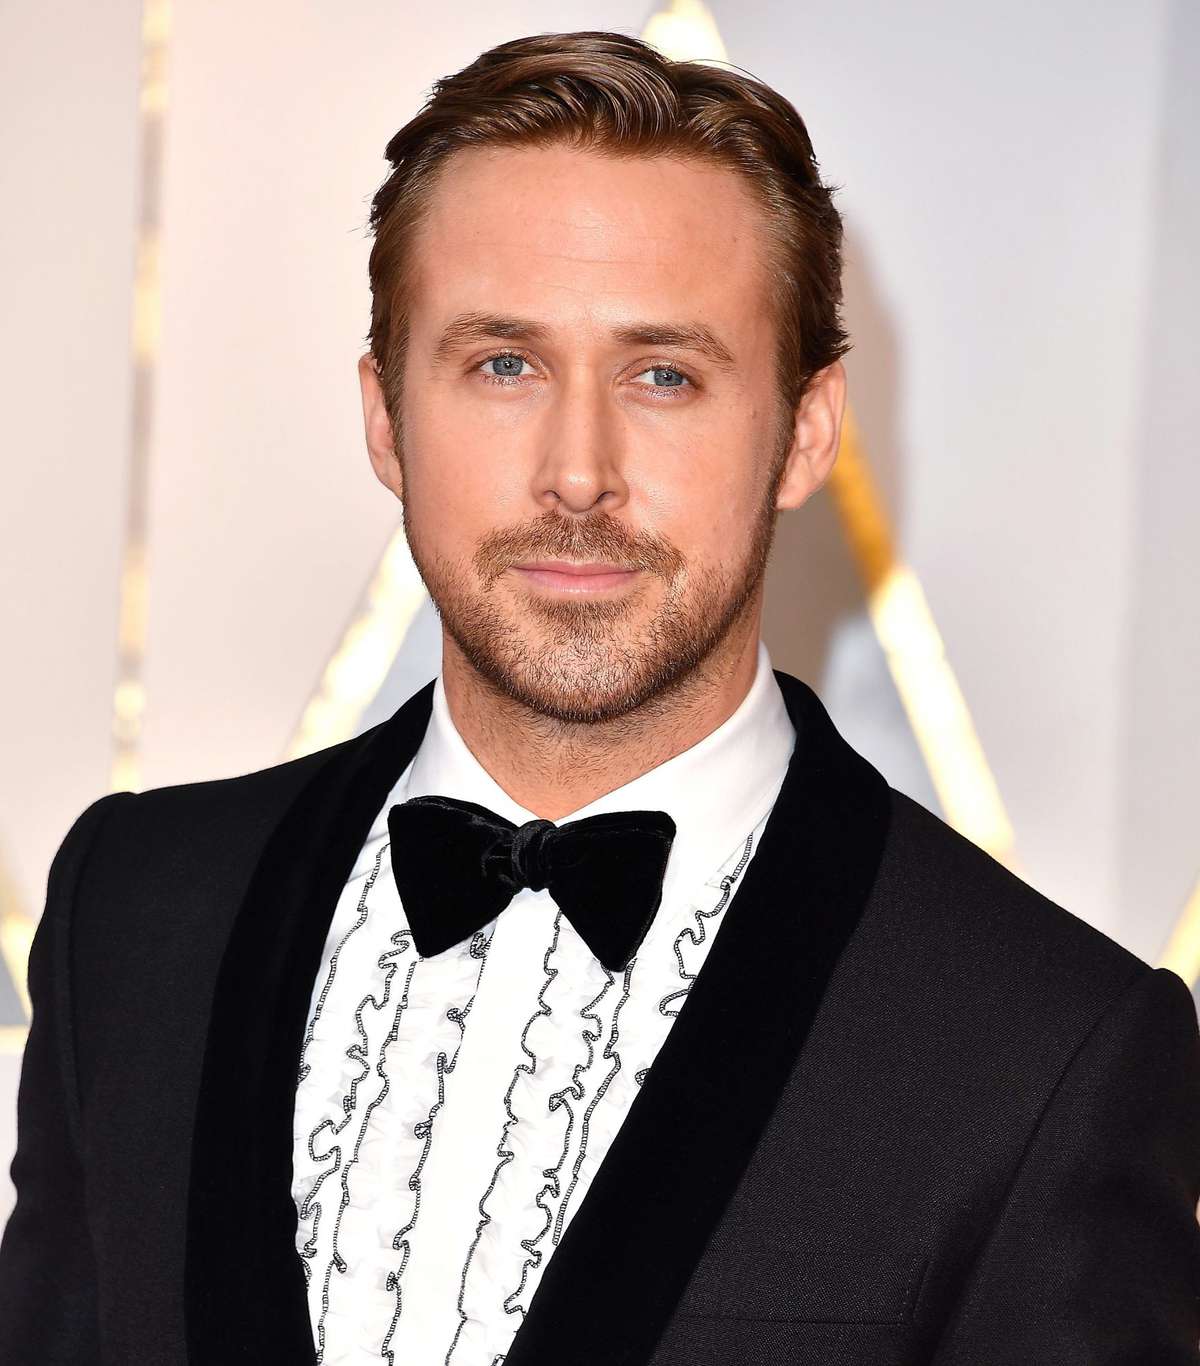 Ryan Gosling - Doppleganger